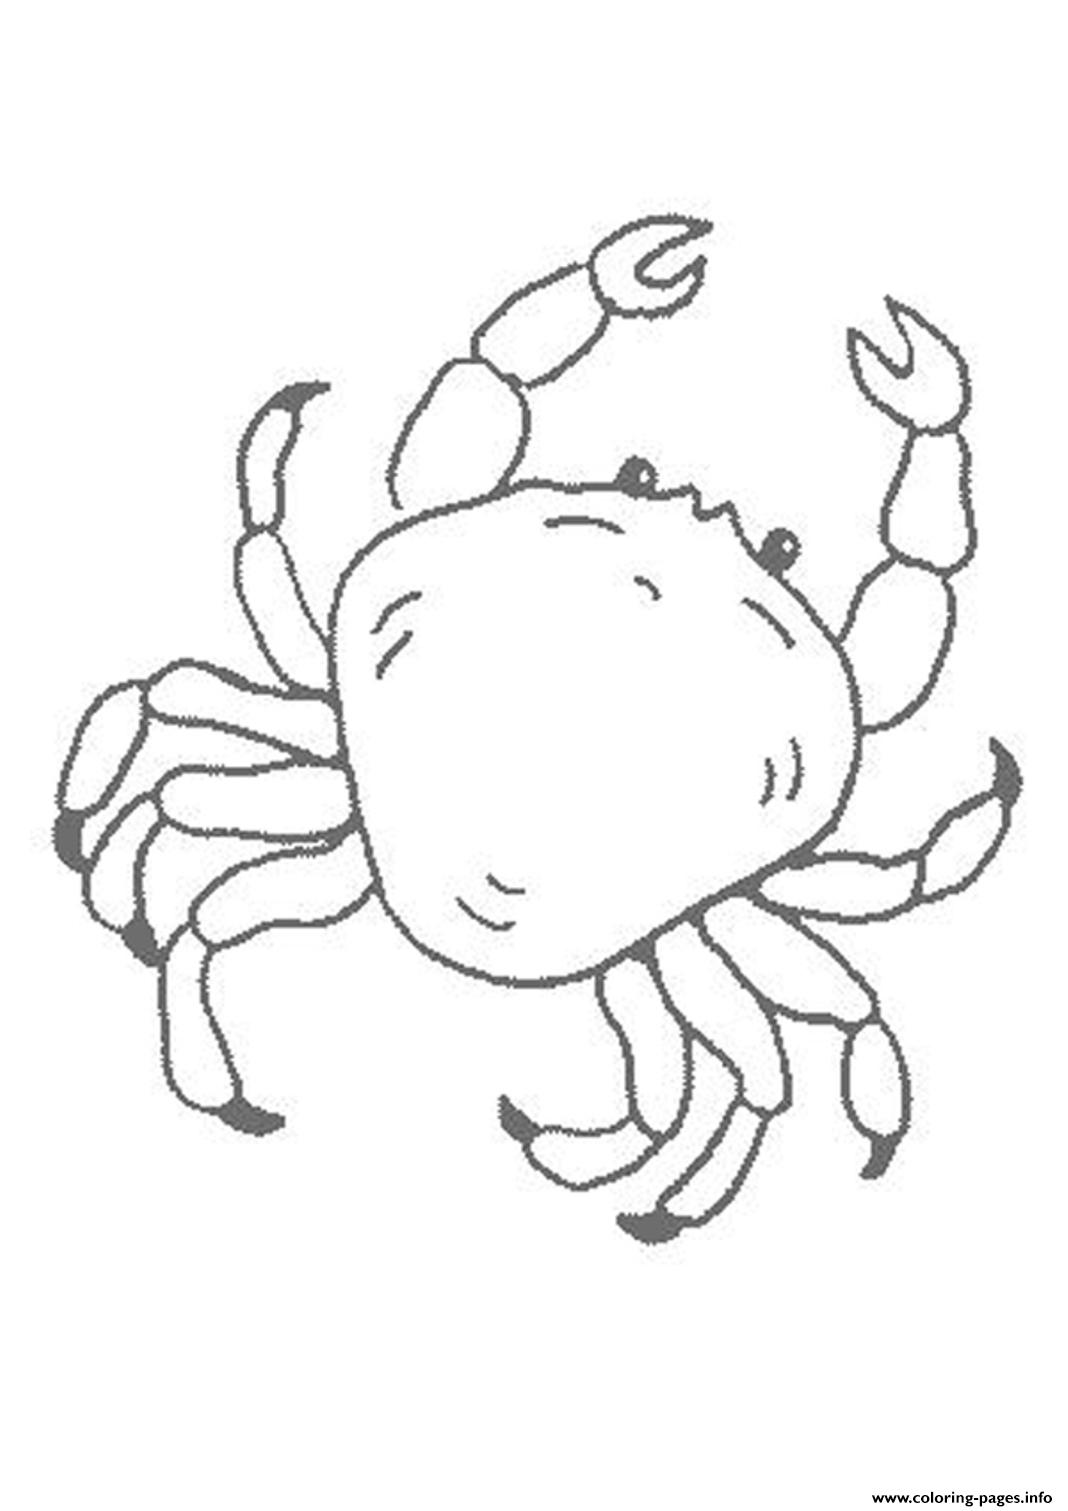 Animal Crab S072f coloring